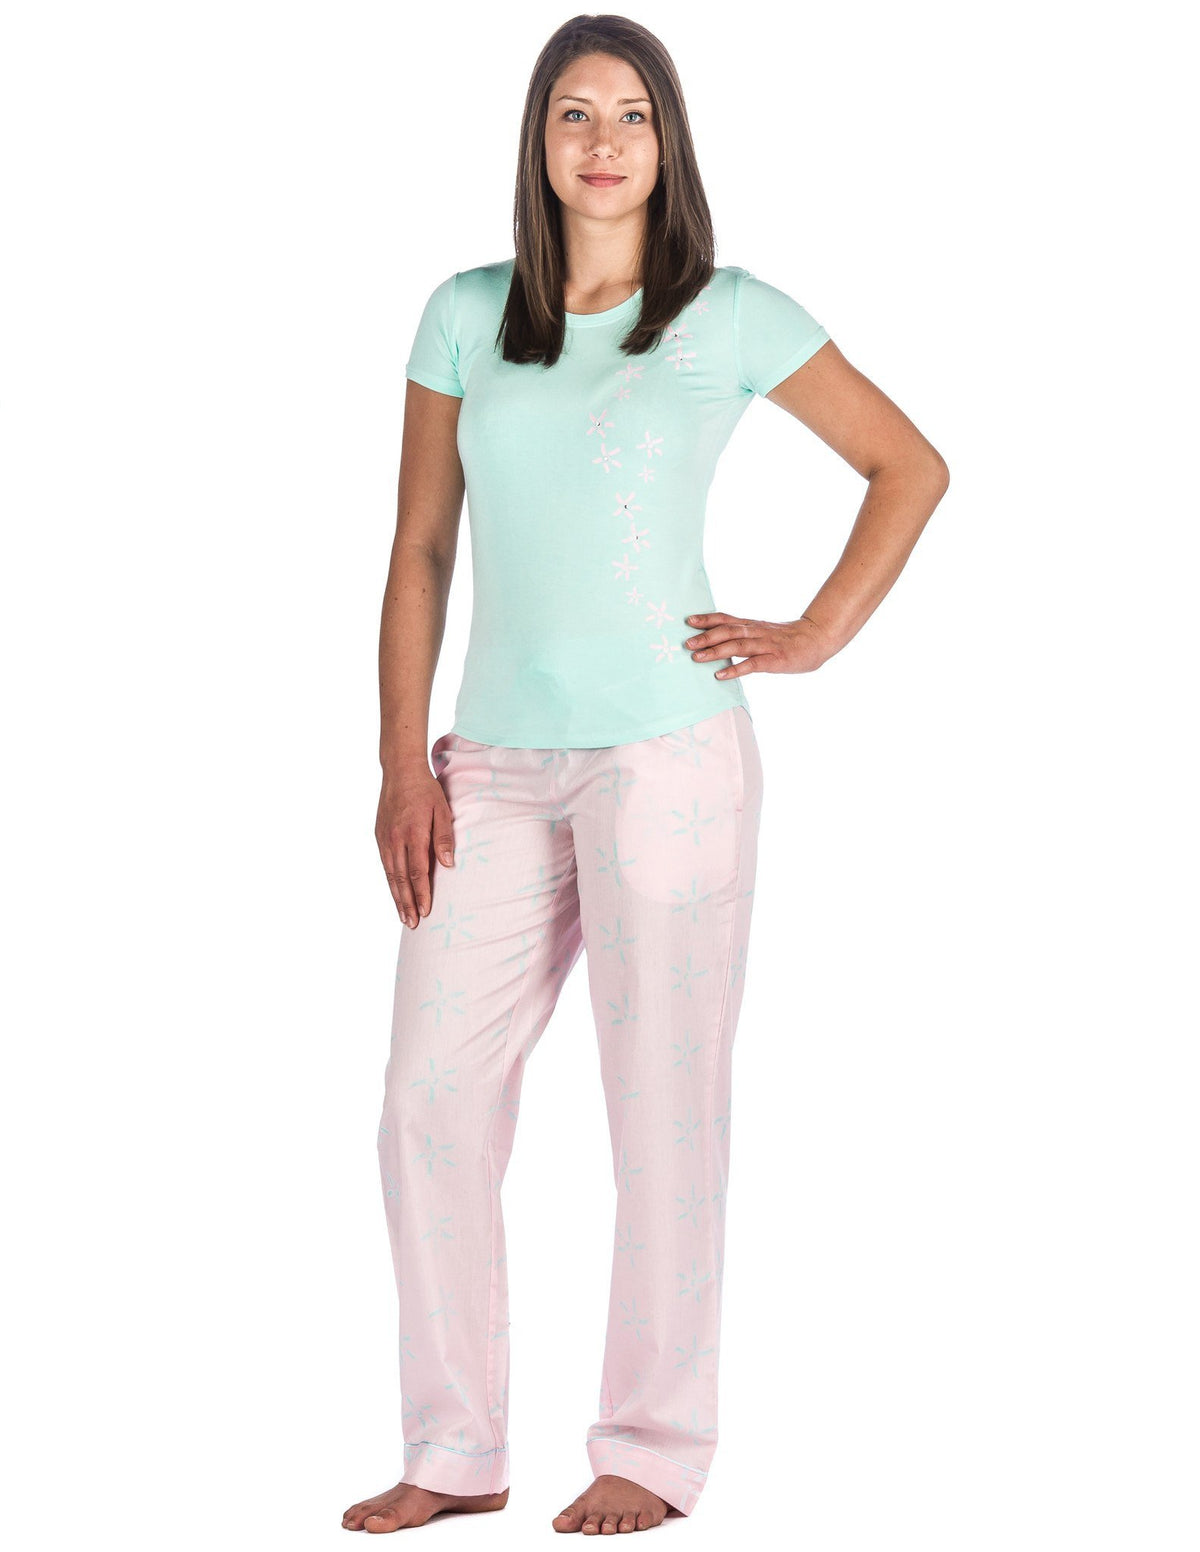 Women's Premium Cotton Poplin Lounge/Sleepwear Set - Starlight - Pink/Aqua